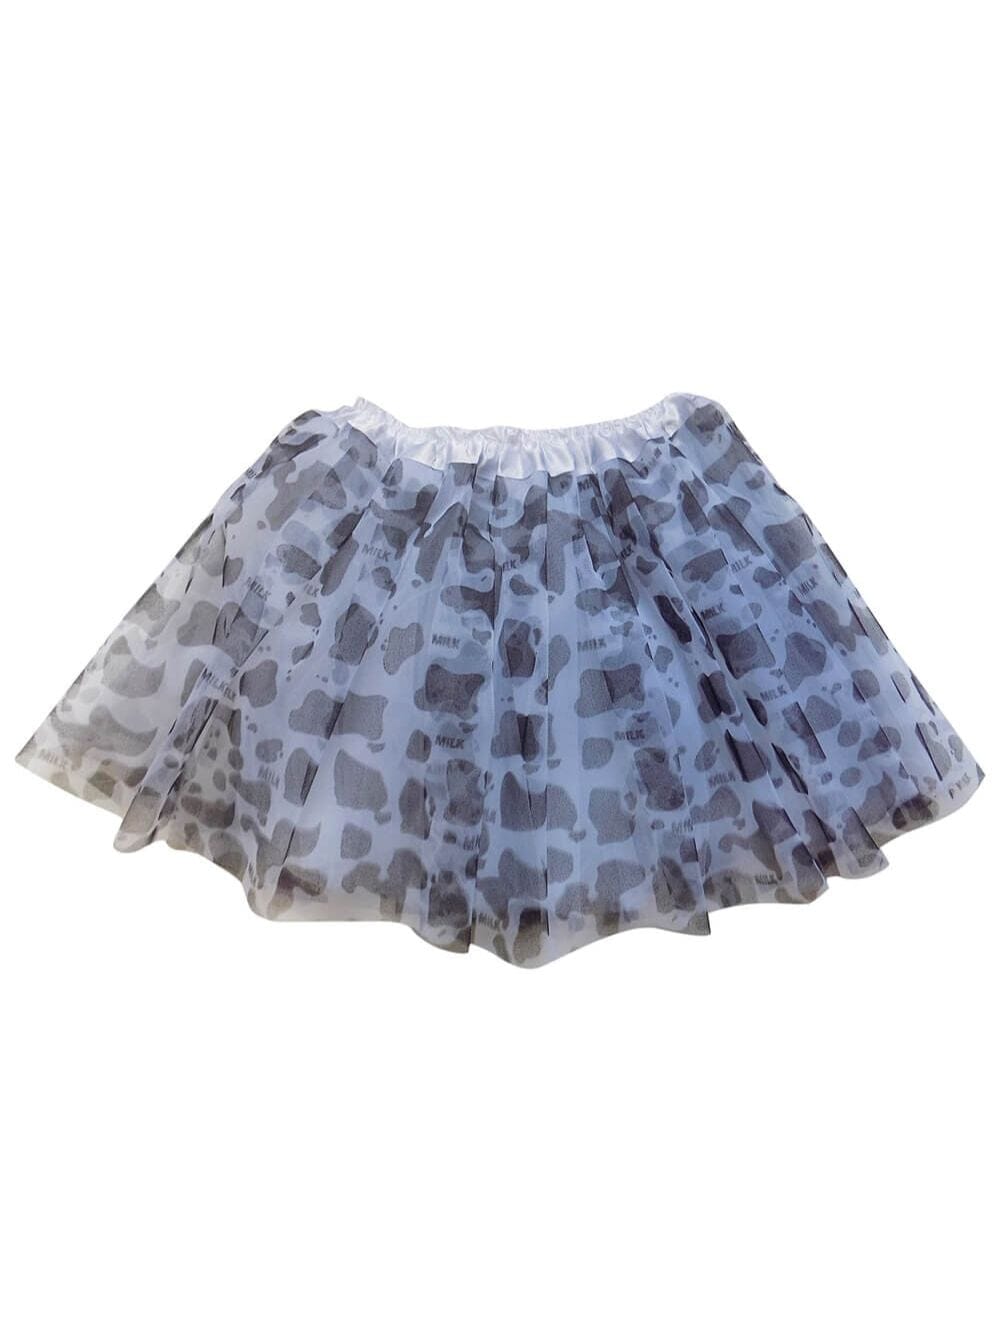 Cow Tutu Skirt for Adult - Women's Cow Print 3- Layer Basic Ballet Tutu - Sydney So Sweet